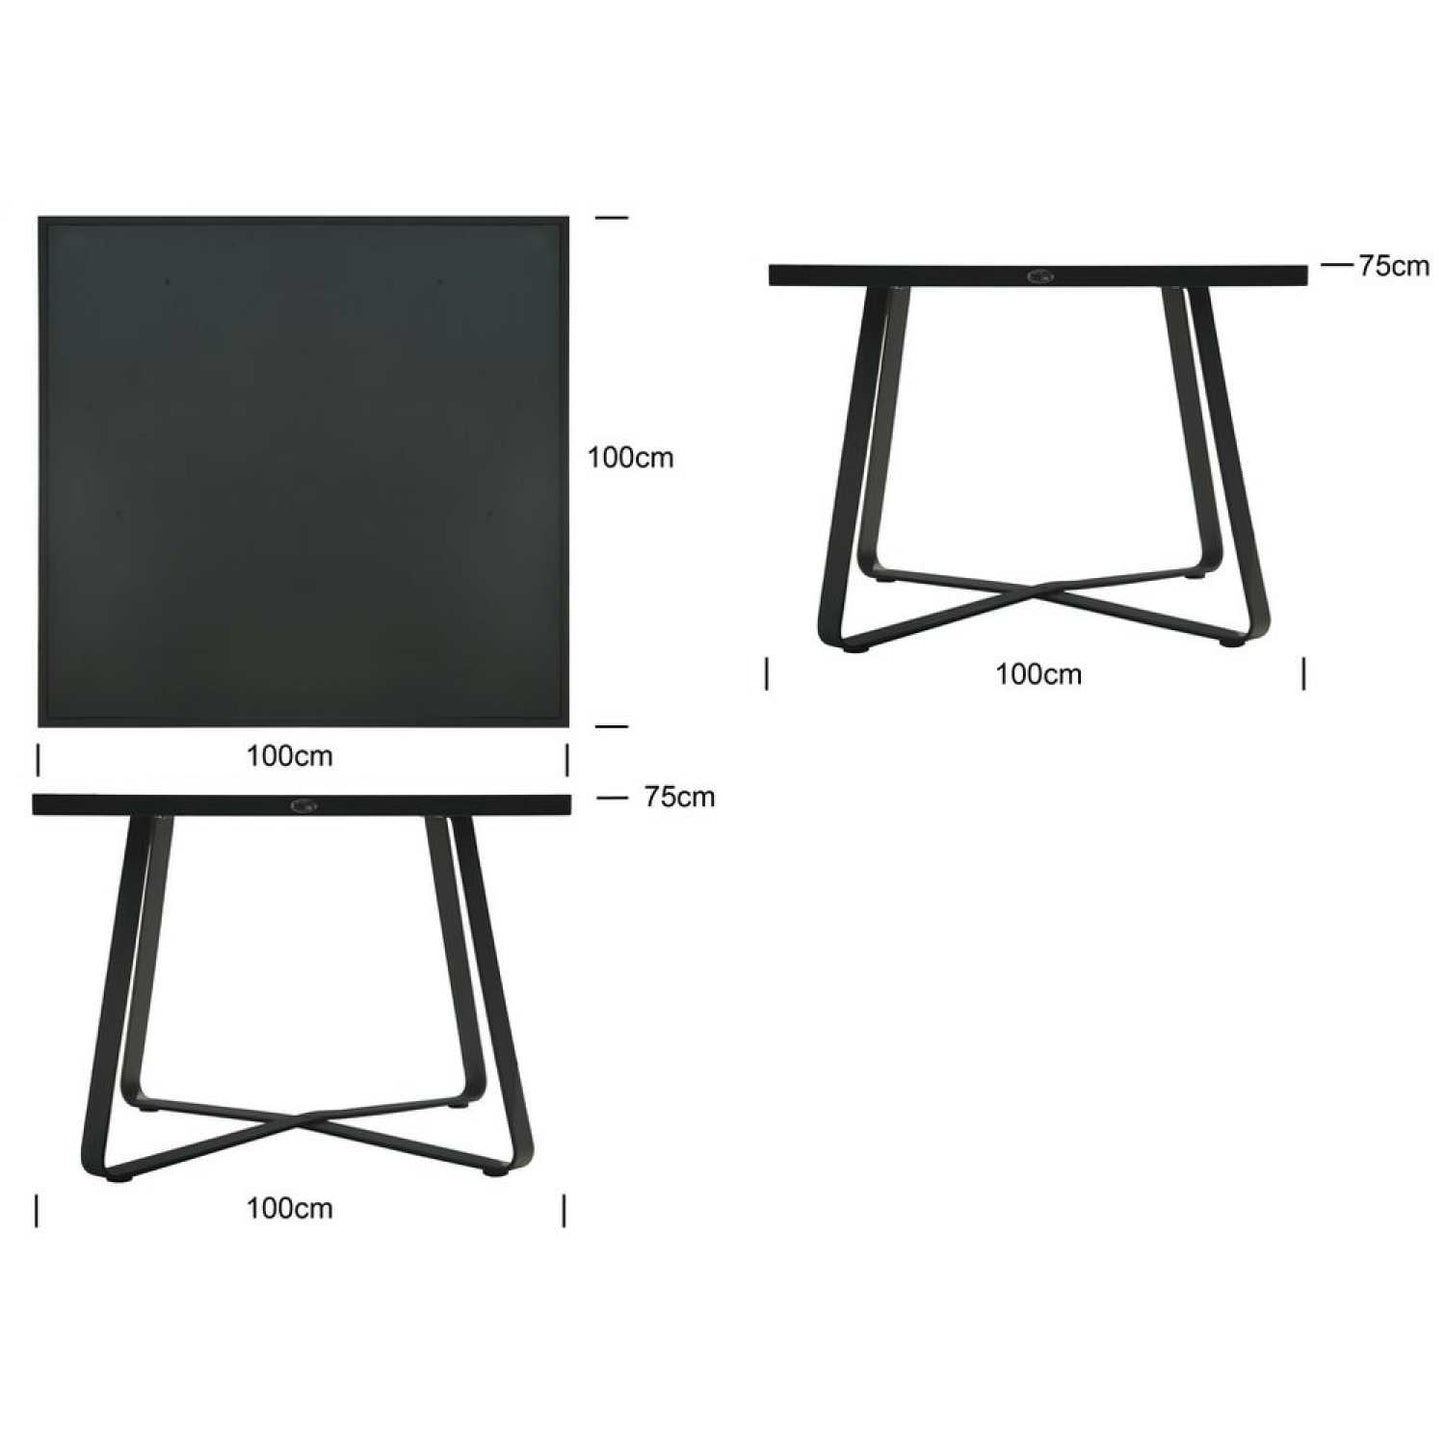 Horizon Square 4 Seat Table - PadioLiving - Horizon Square 4 Seat Table - Outdoor Dining Table - PadioLiving